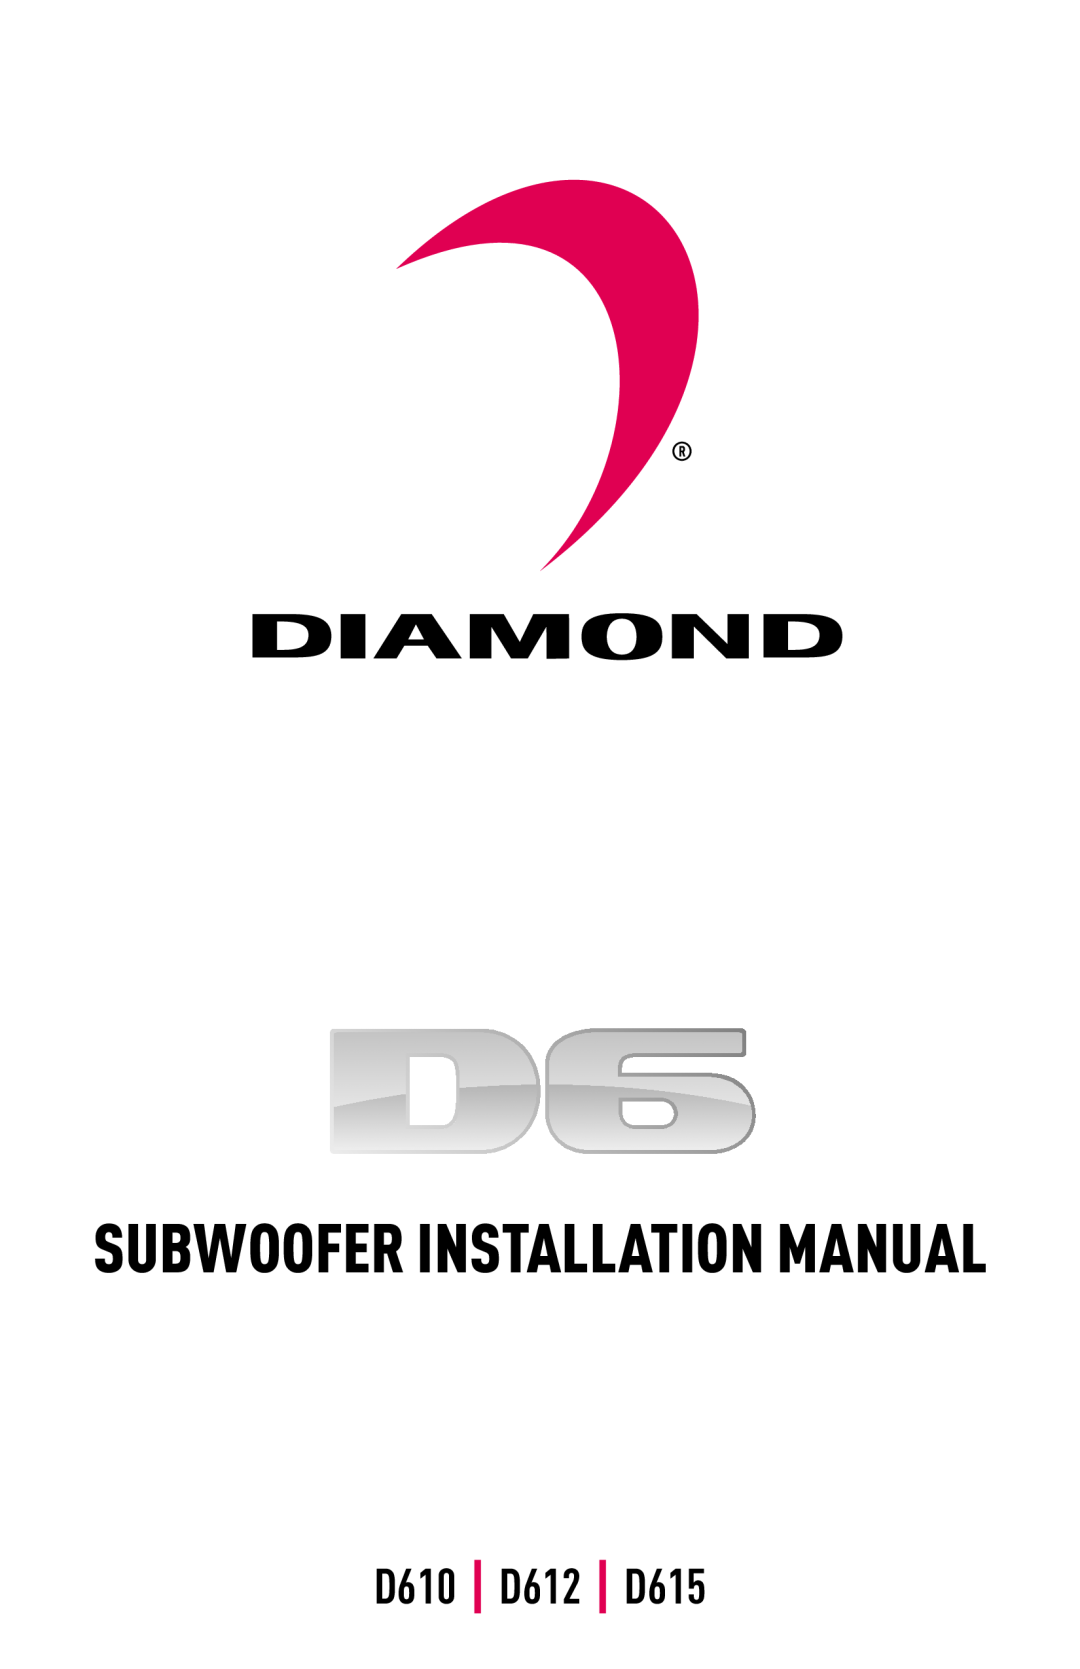 Diamond installation manual Subwoofer Installation Manual, D610 D612 D615 